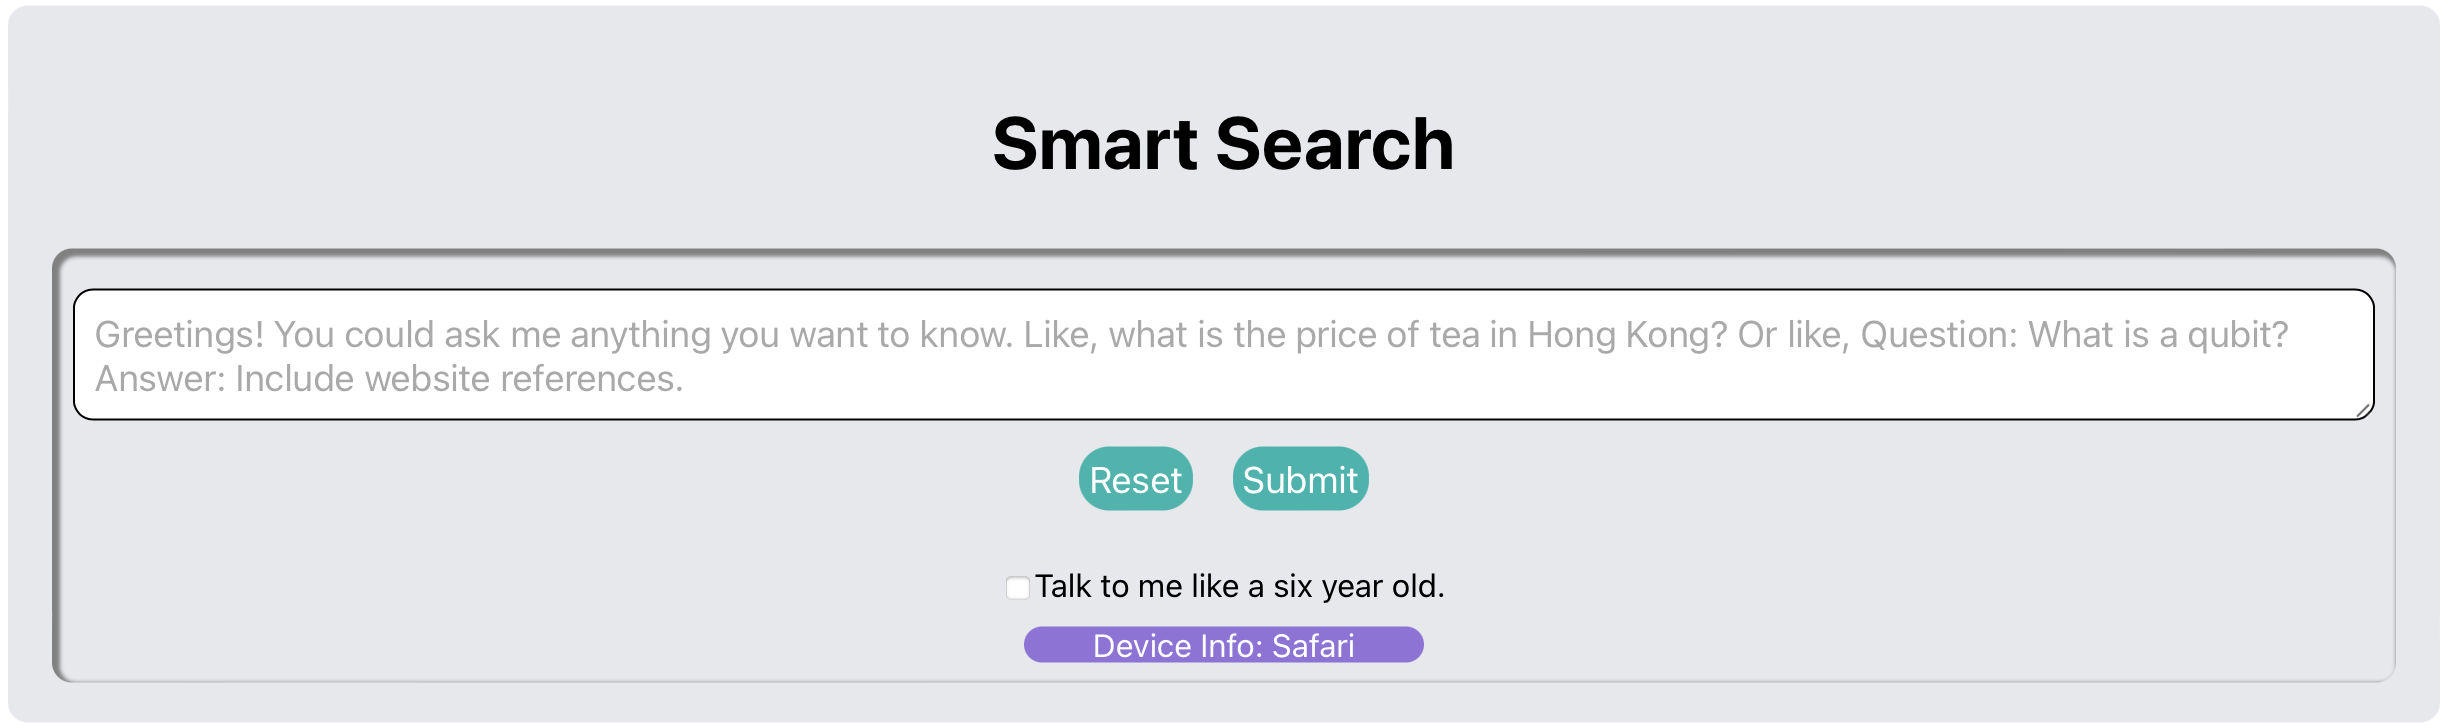 Smart Search UI